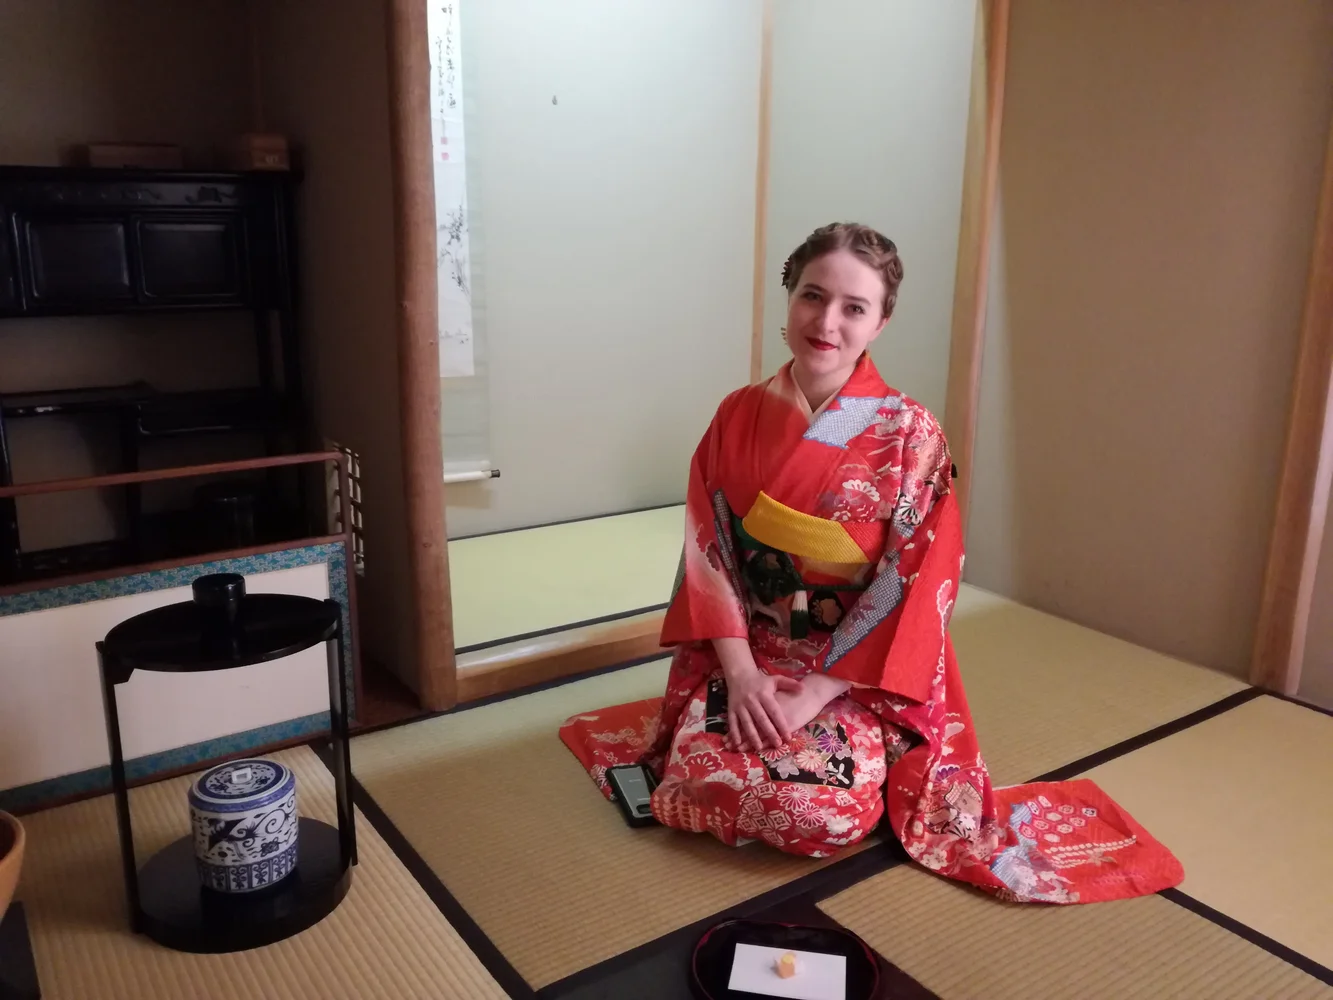 Tokyo Tea Ceremony Experience or Wearing Kimono at Bonsai Museum